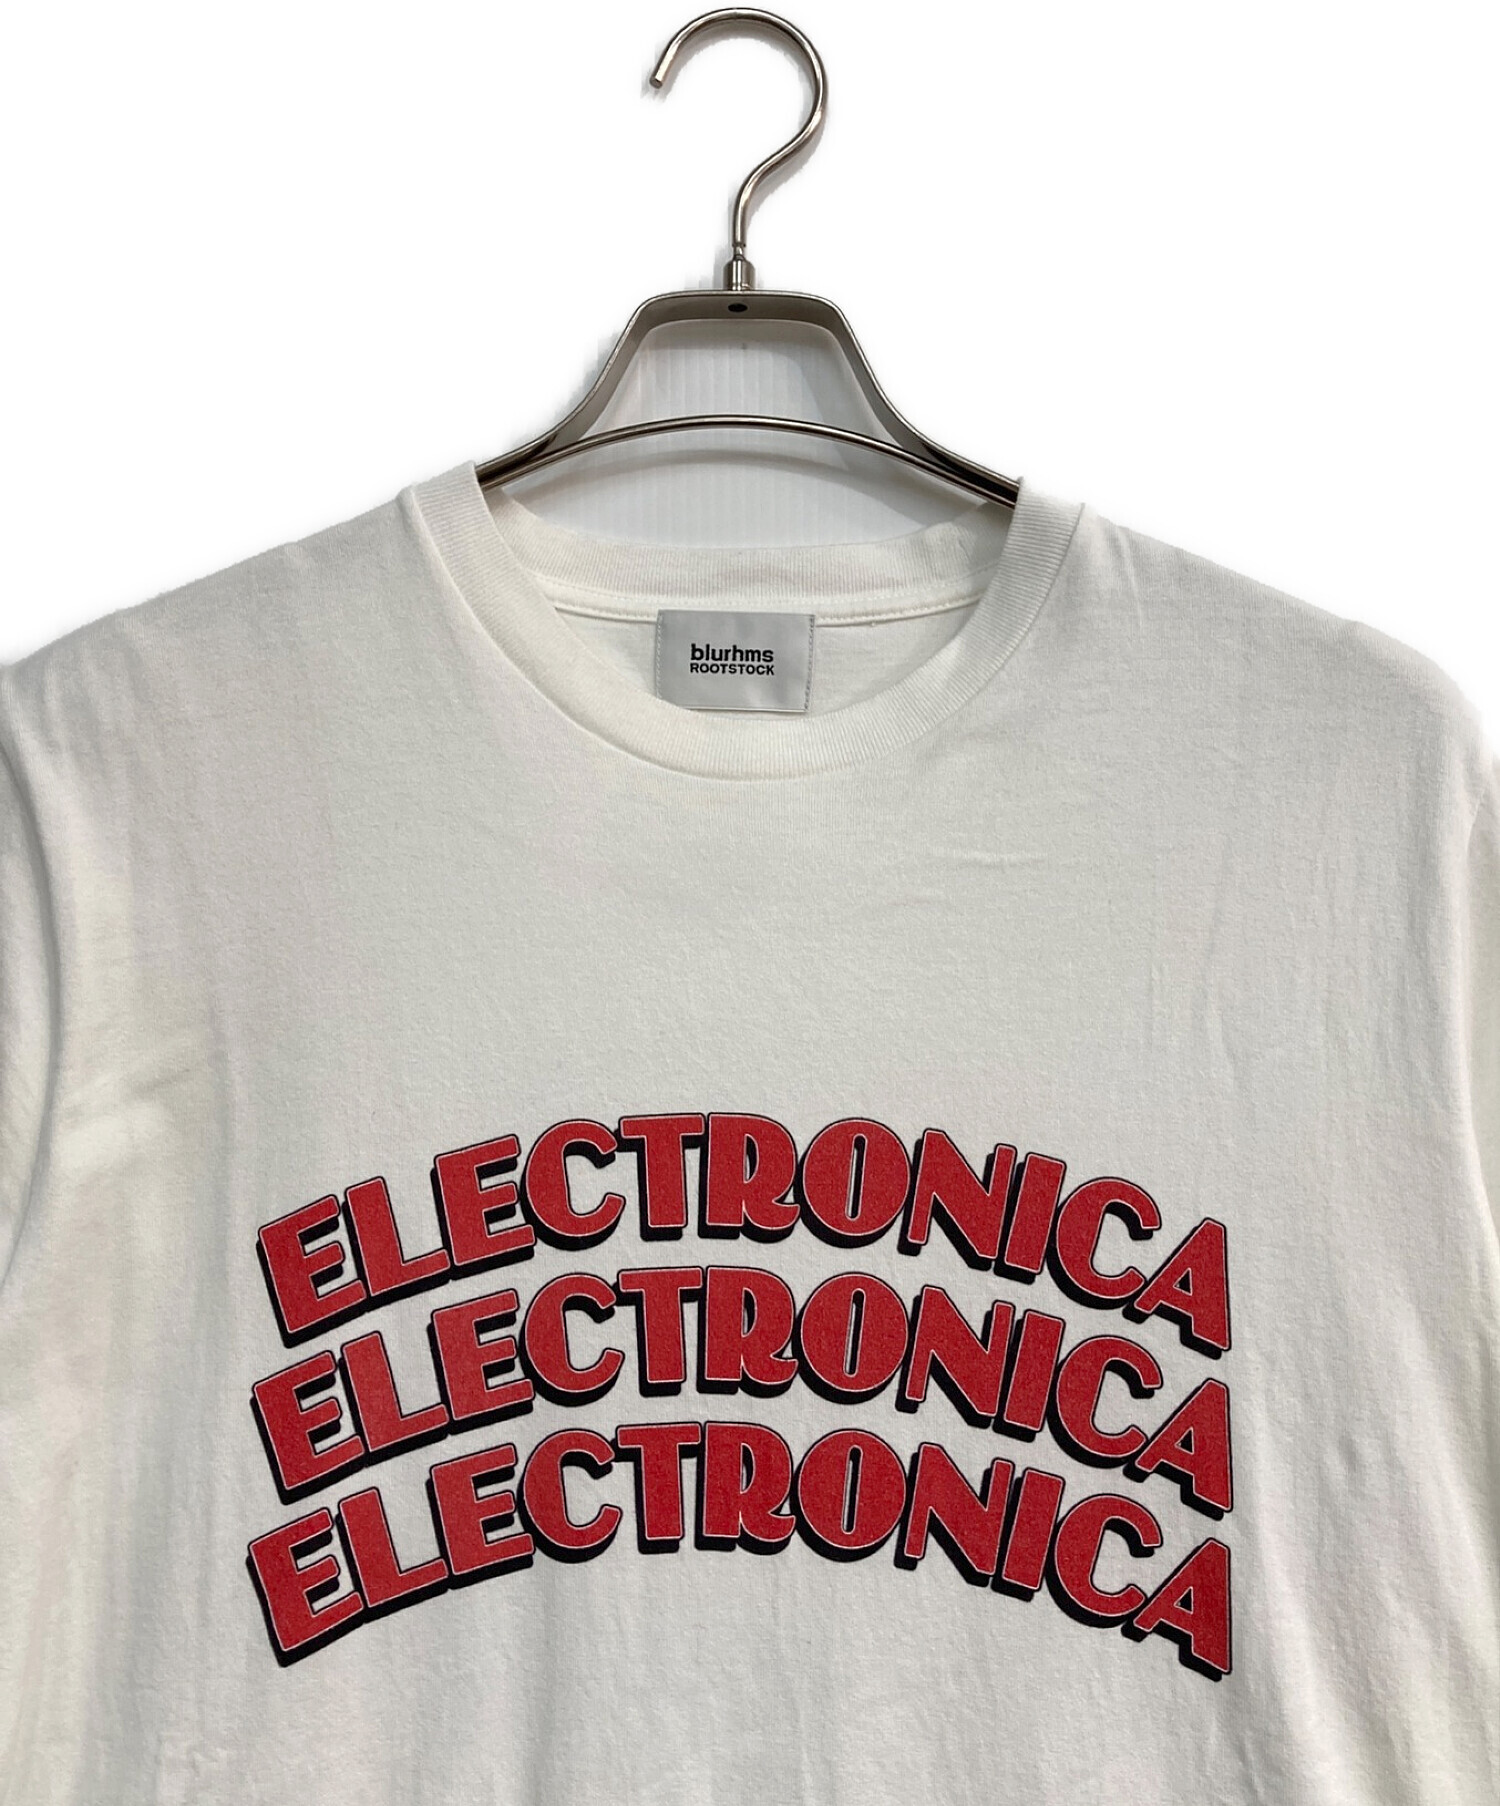 blurhms (ブラームス) ELECTRONICAプリントTシャツ ホワイト サイズ:3